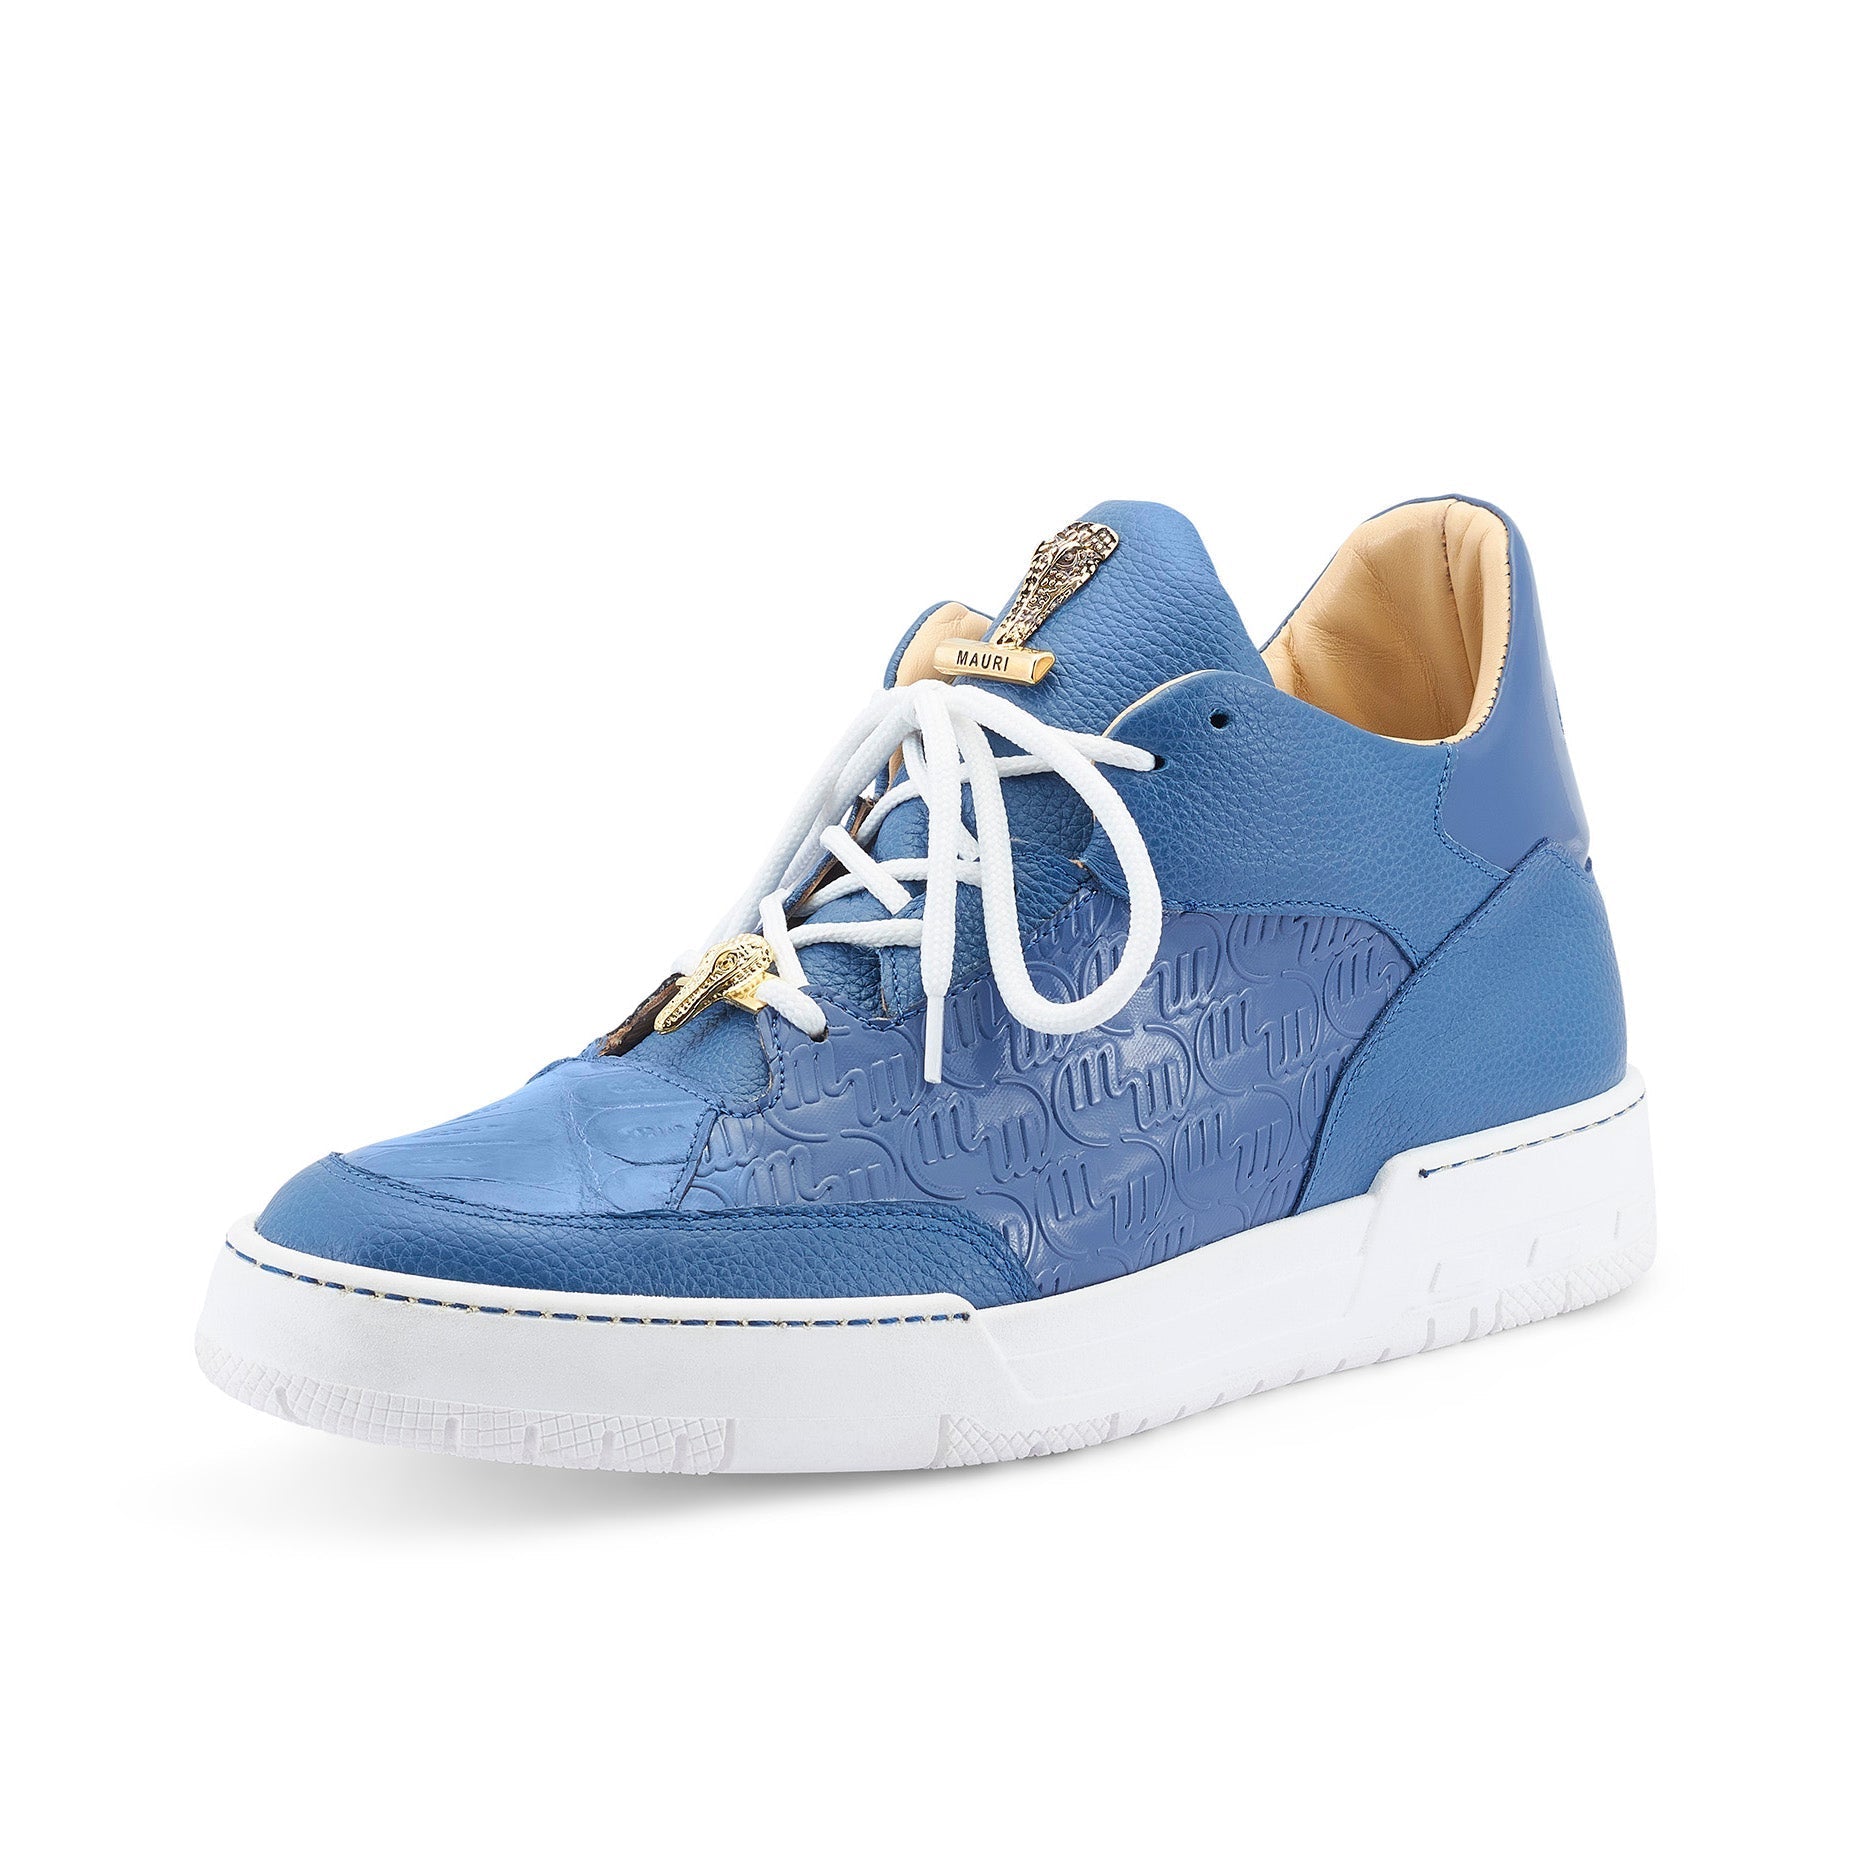 Mauri Ghost 8423 Men's Shoes Caribbean Blue Crocodile / Patent & Calf-Skin  Leather Casual Sneakers (MA5535)